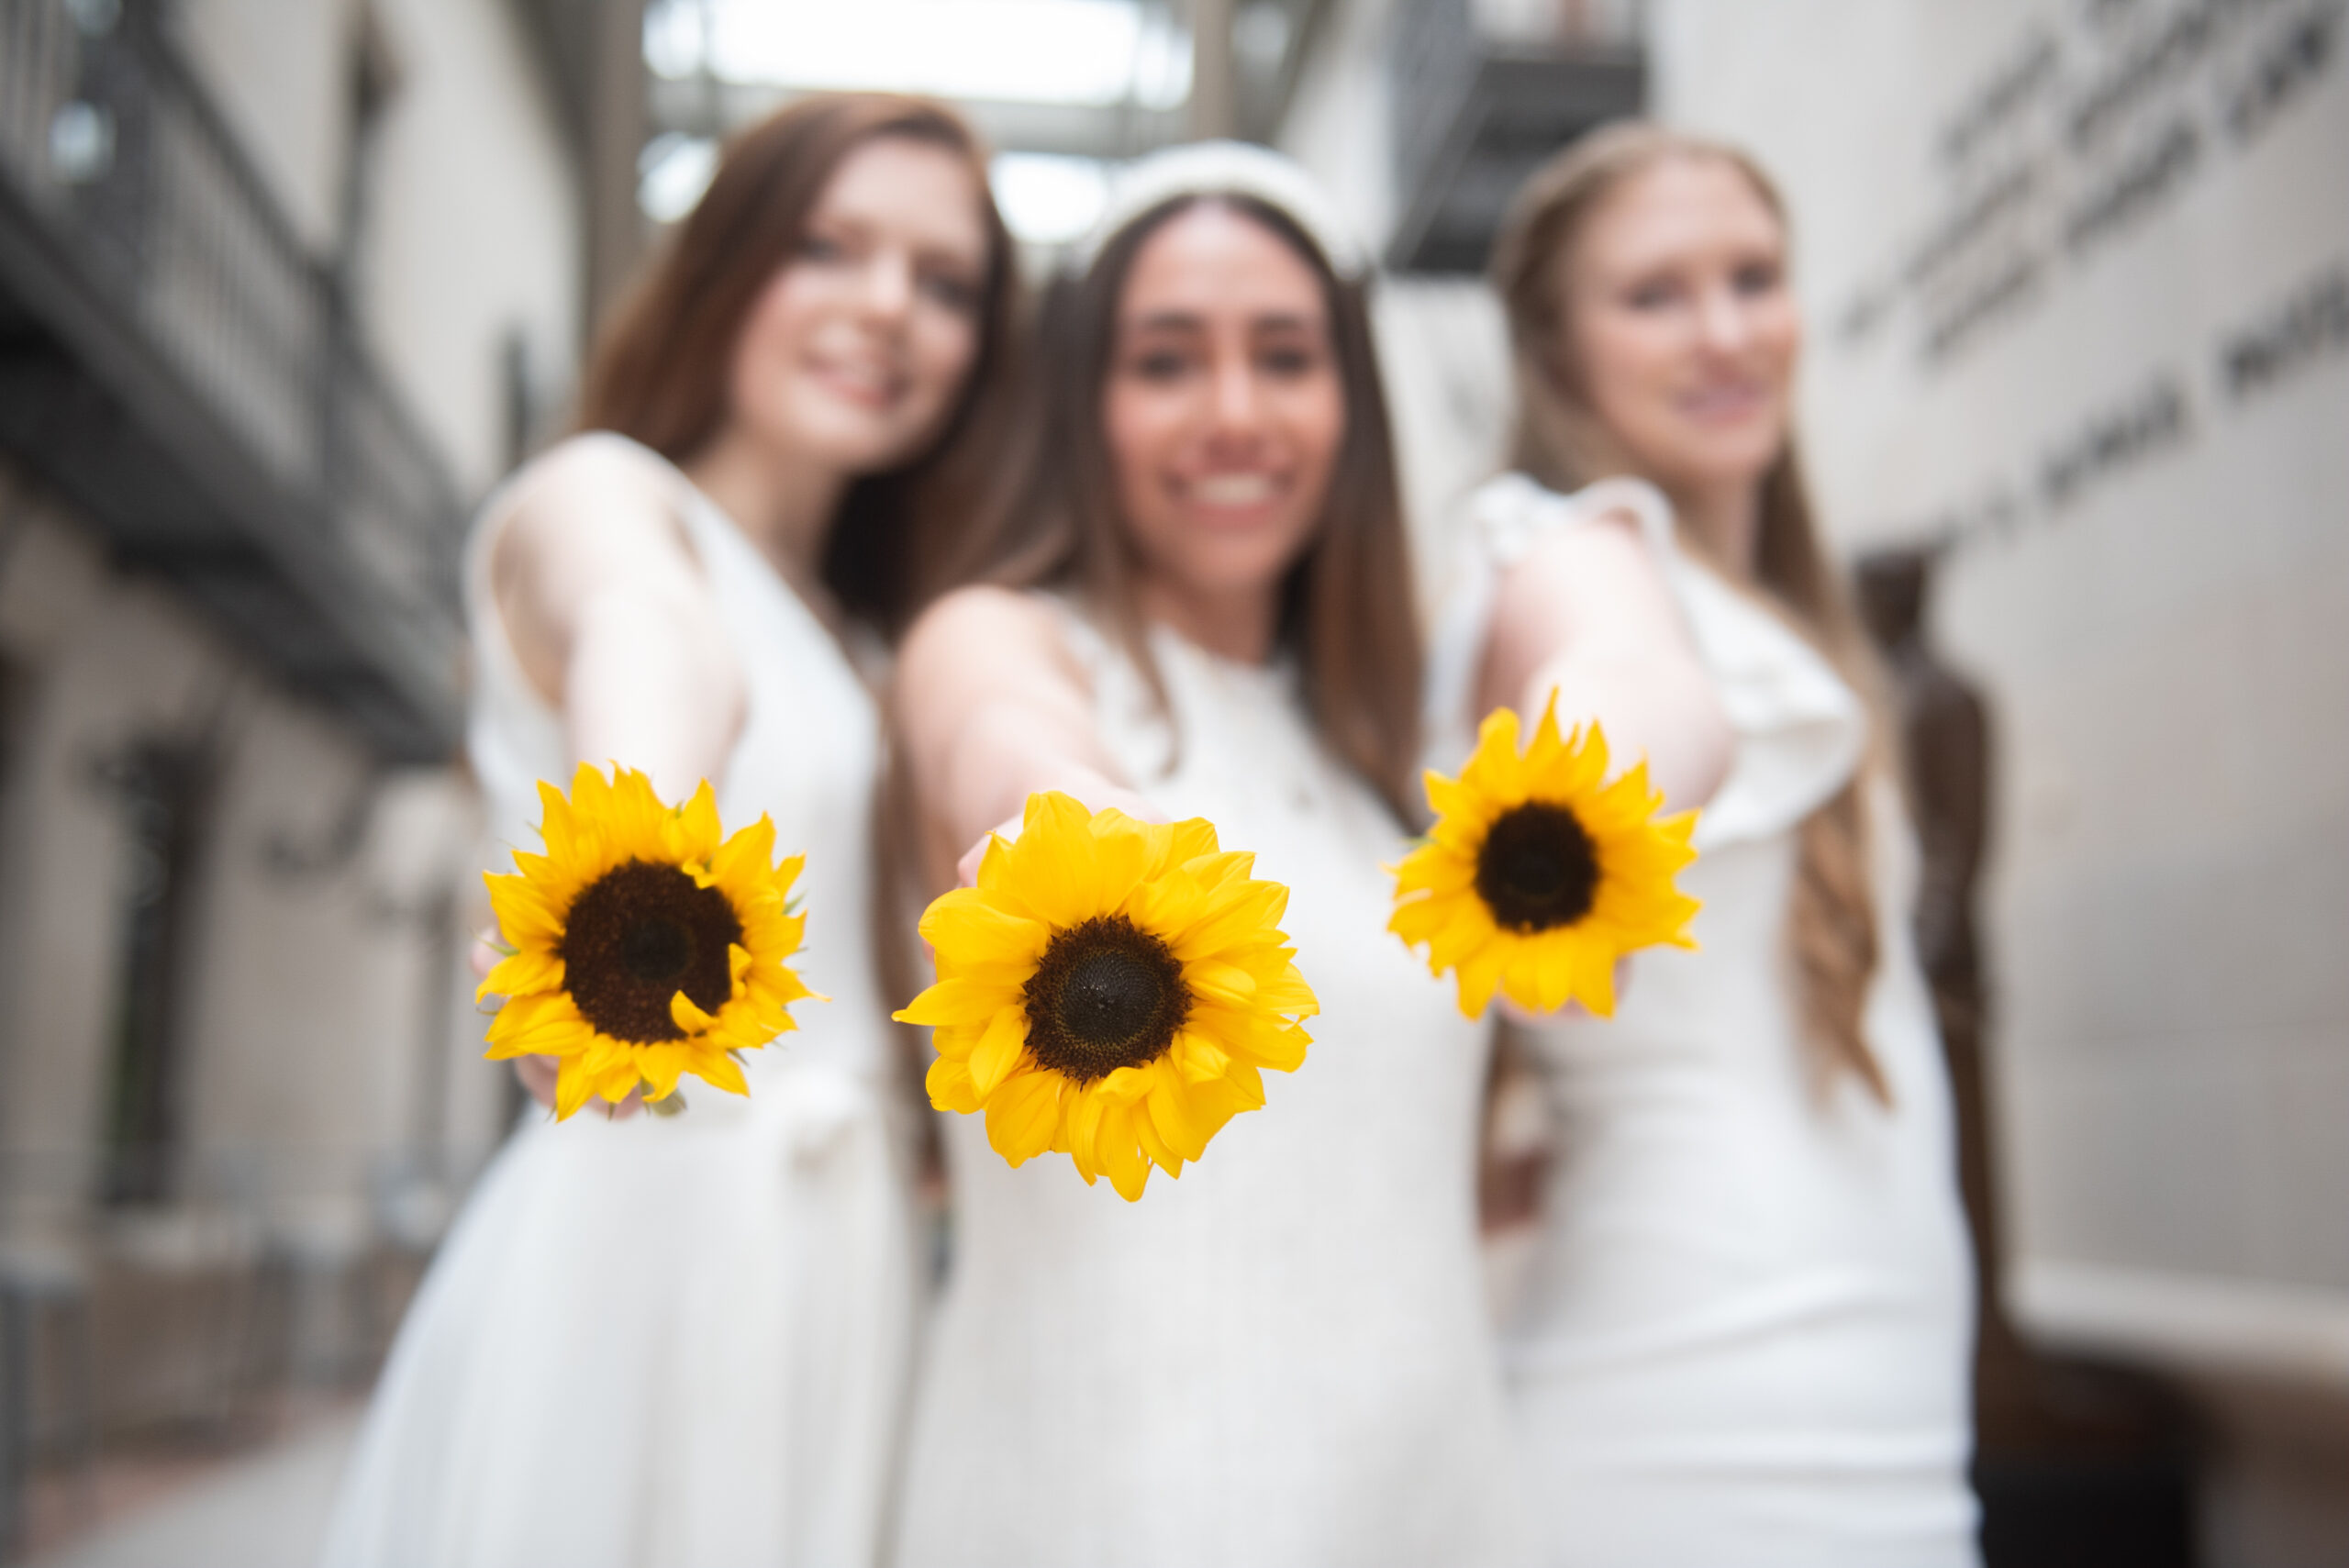 Three graduates in white dresses holding sunflowers.